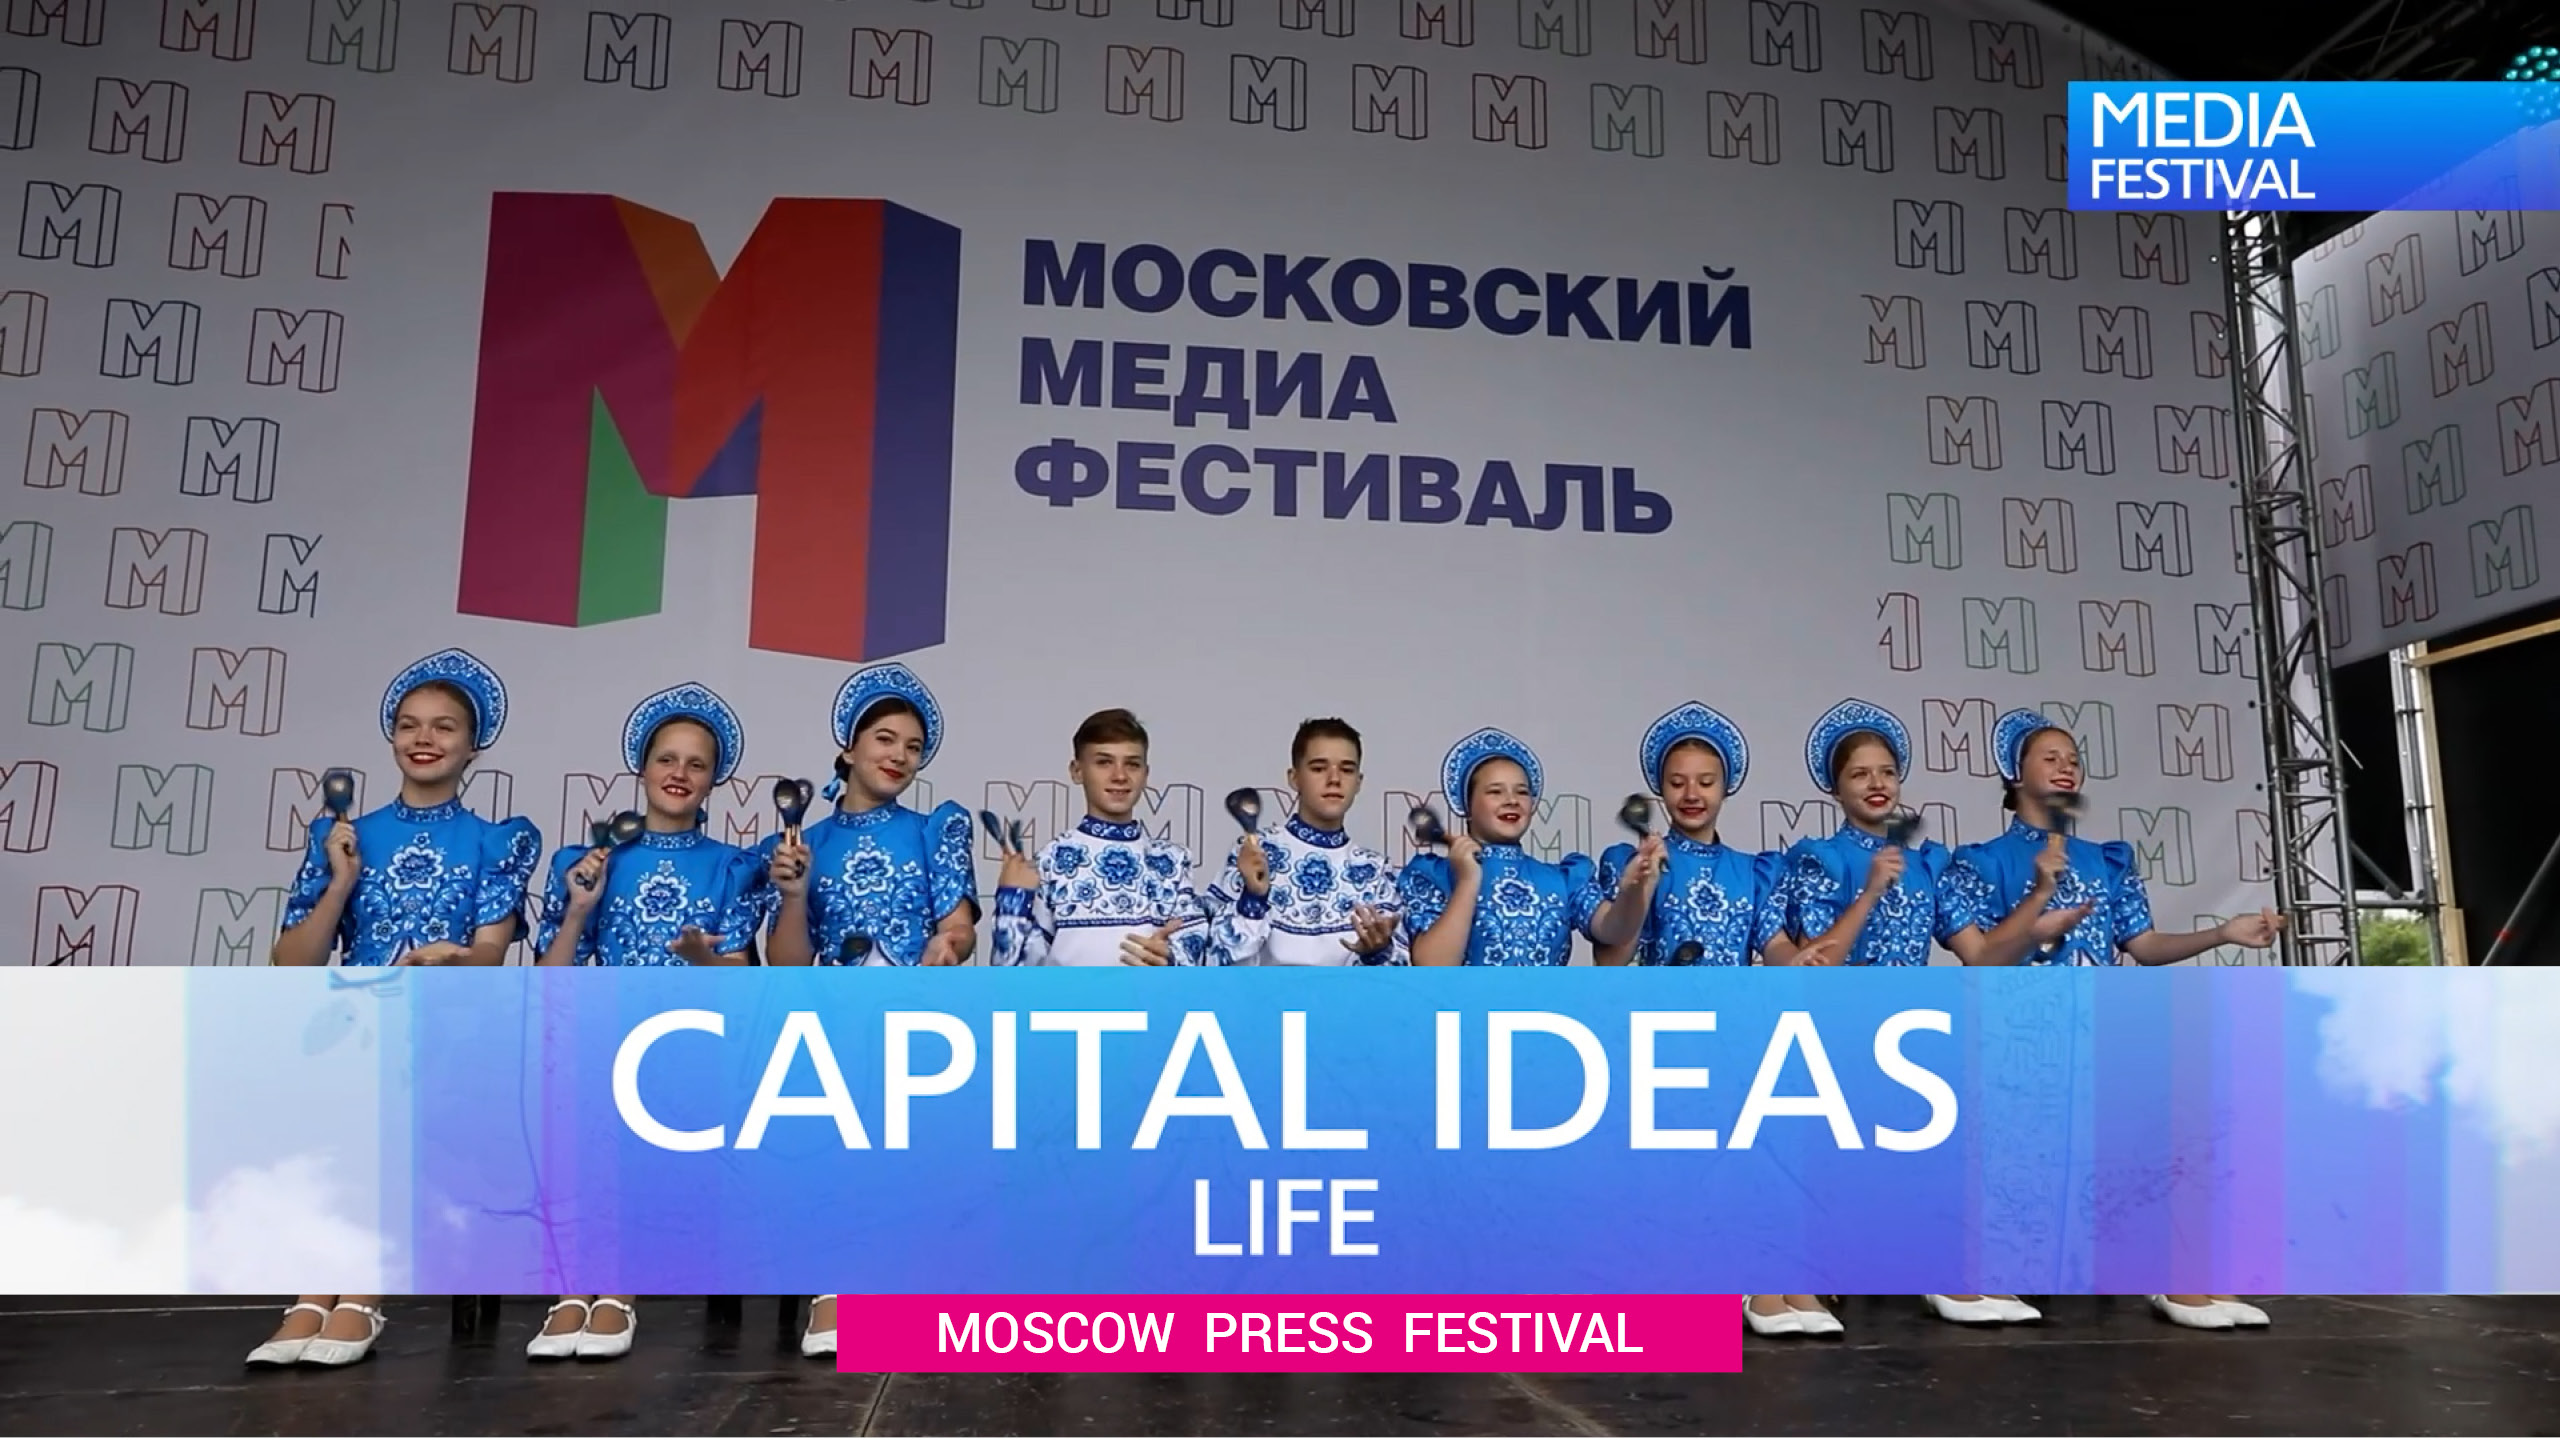 Capital Ideas Life. The "Moscow Press Festival".